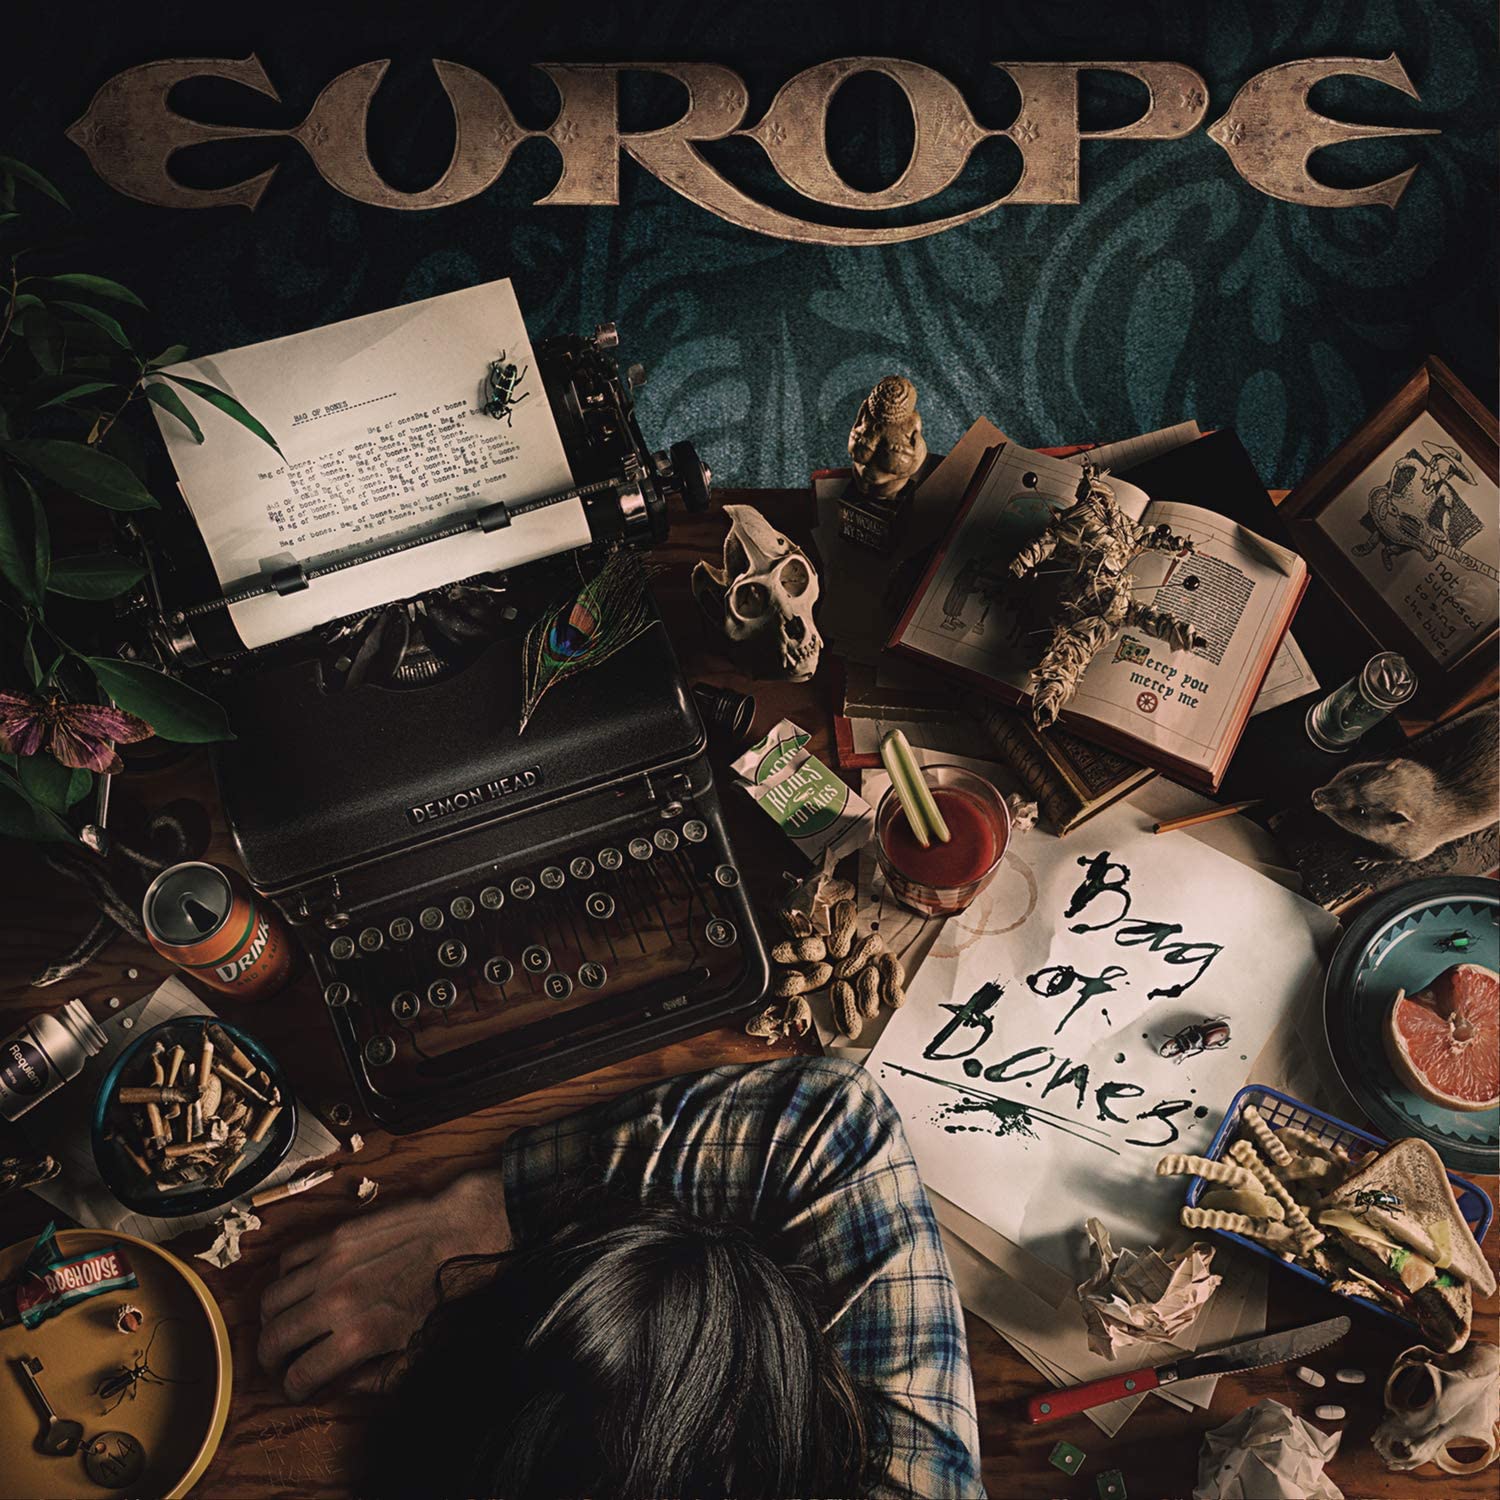 Archive: Album review – Europe – Bag Of Bones